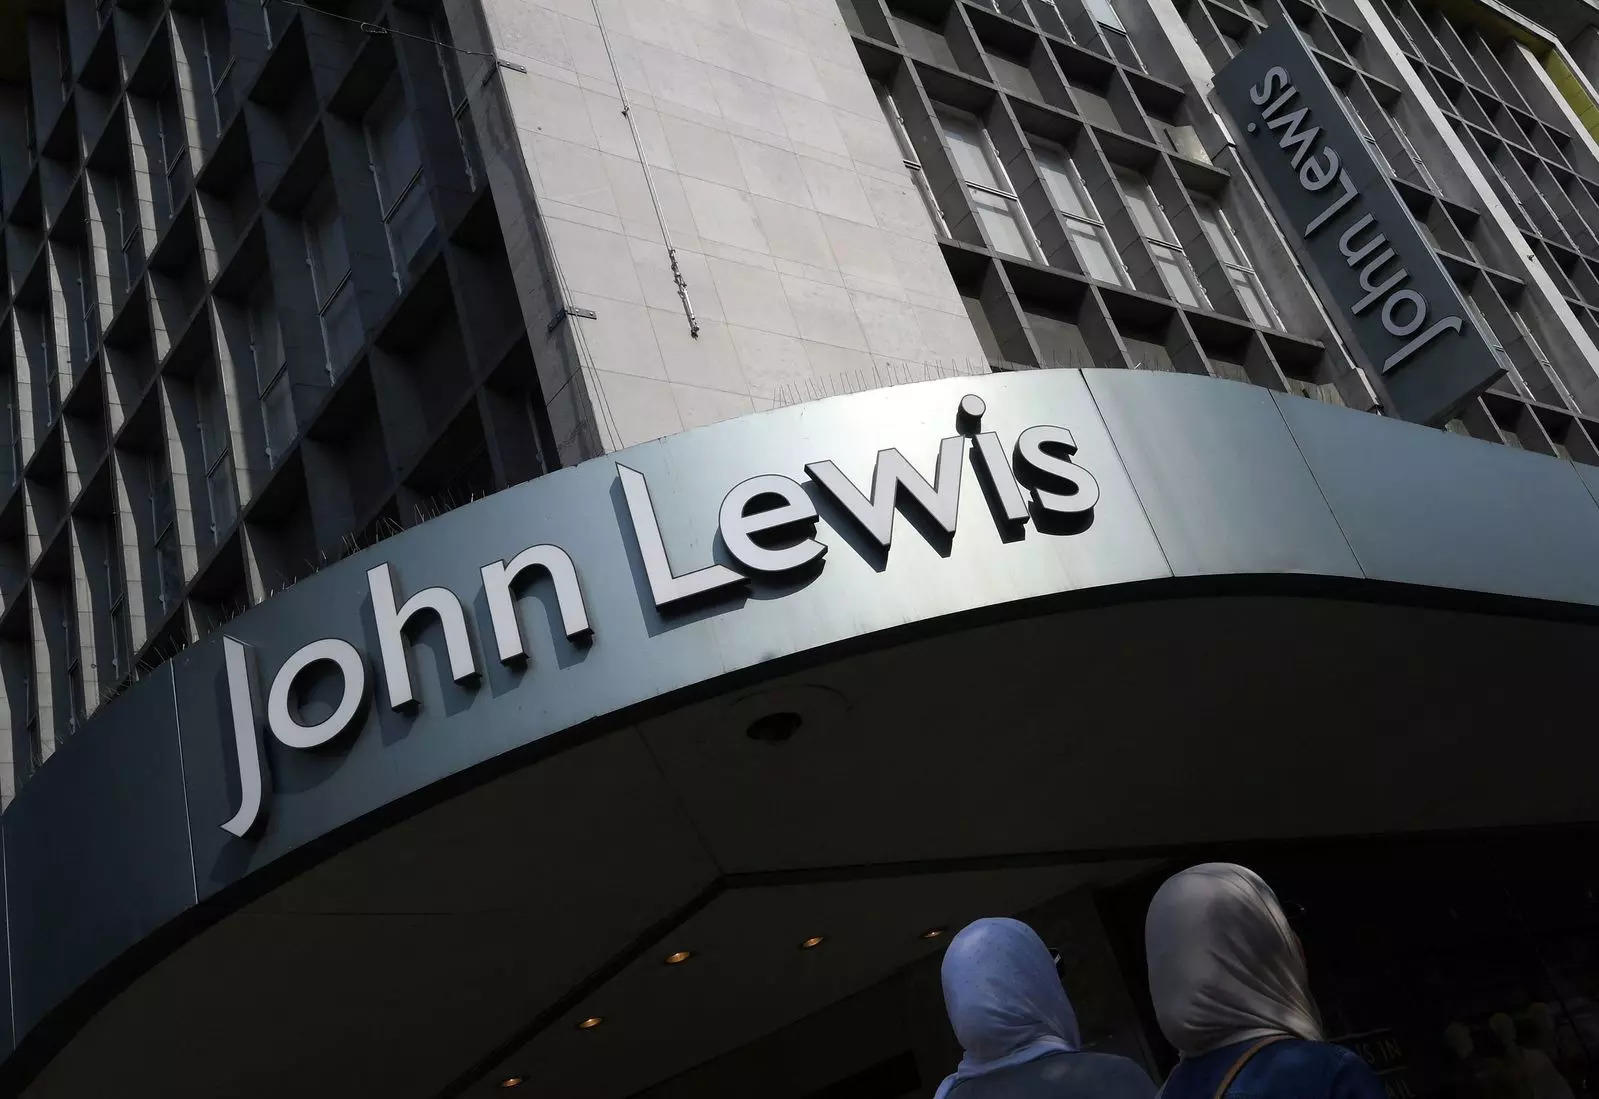 Britain's John Lewis cuts losses and restores staff bonus